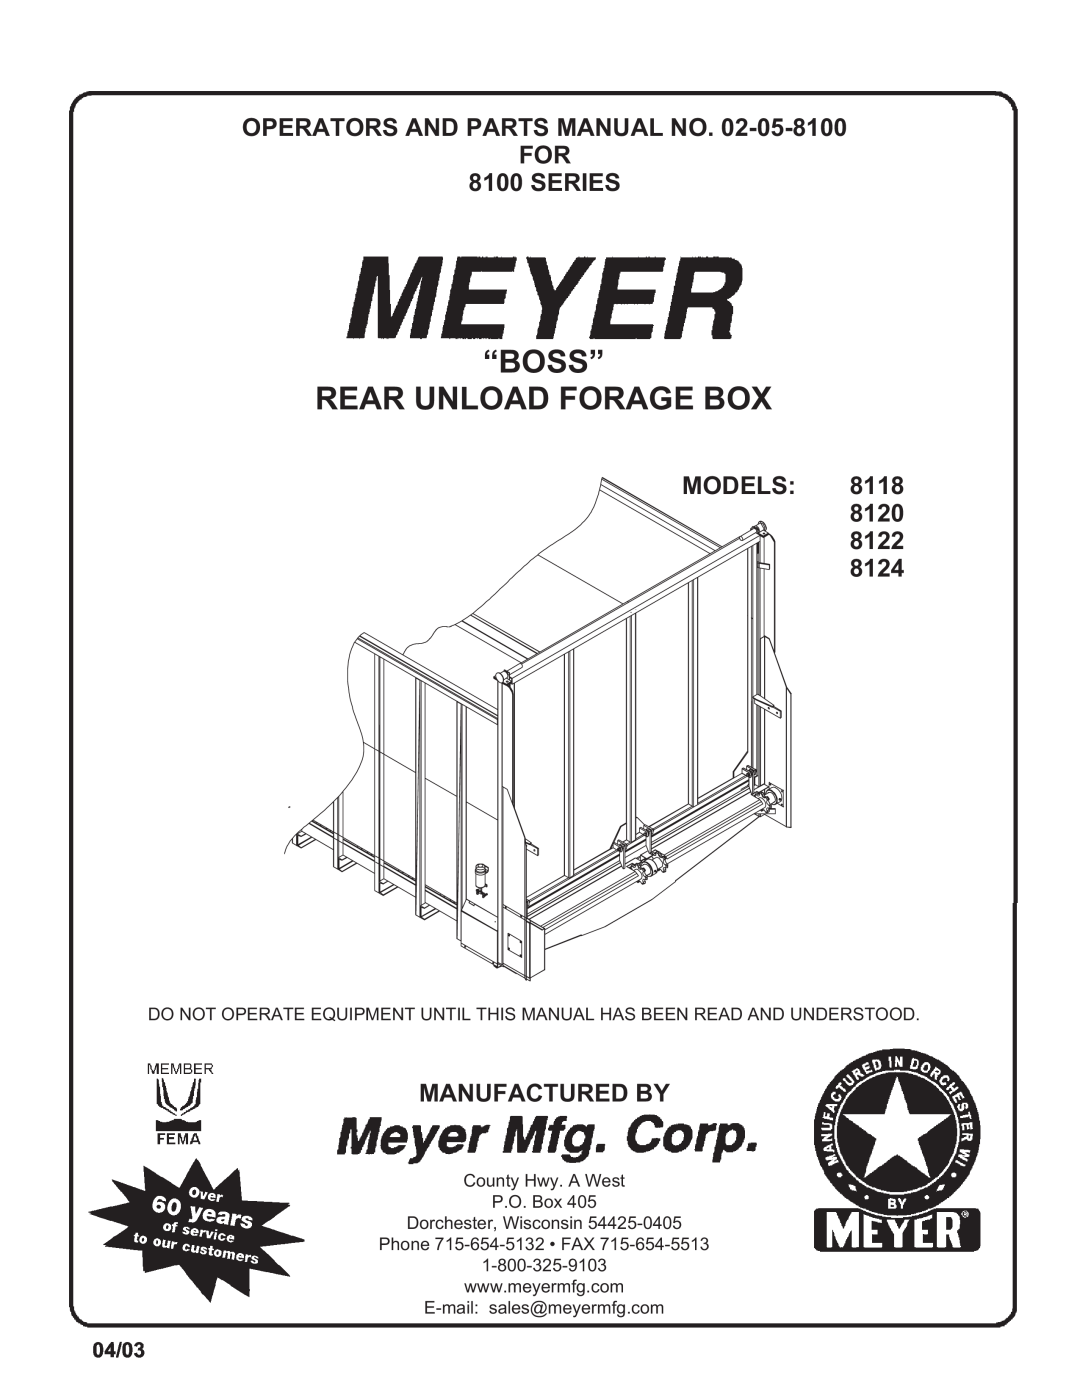 Meyer manual “Boss” Rear Unload Forage Box, OPERATORS AND PARTS MANUAL NO FOR 8100 SERIES, MODELS 8118 8120 8122, 04/03 